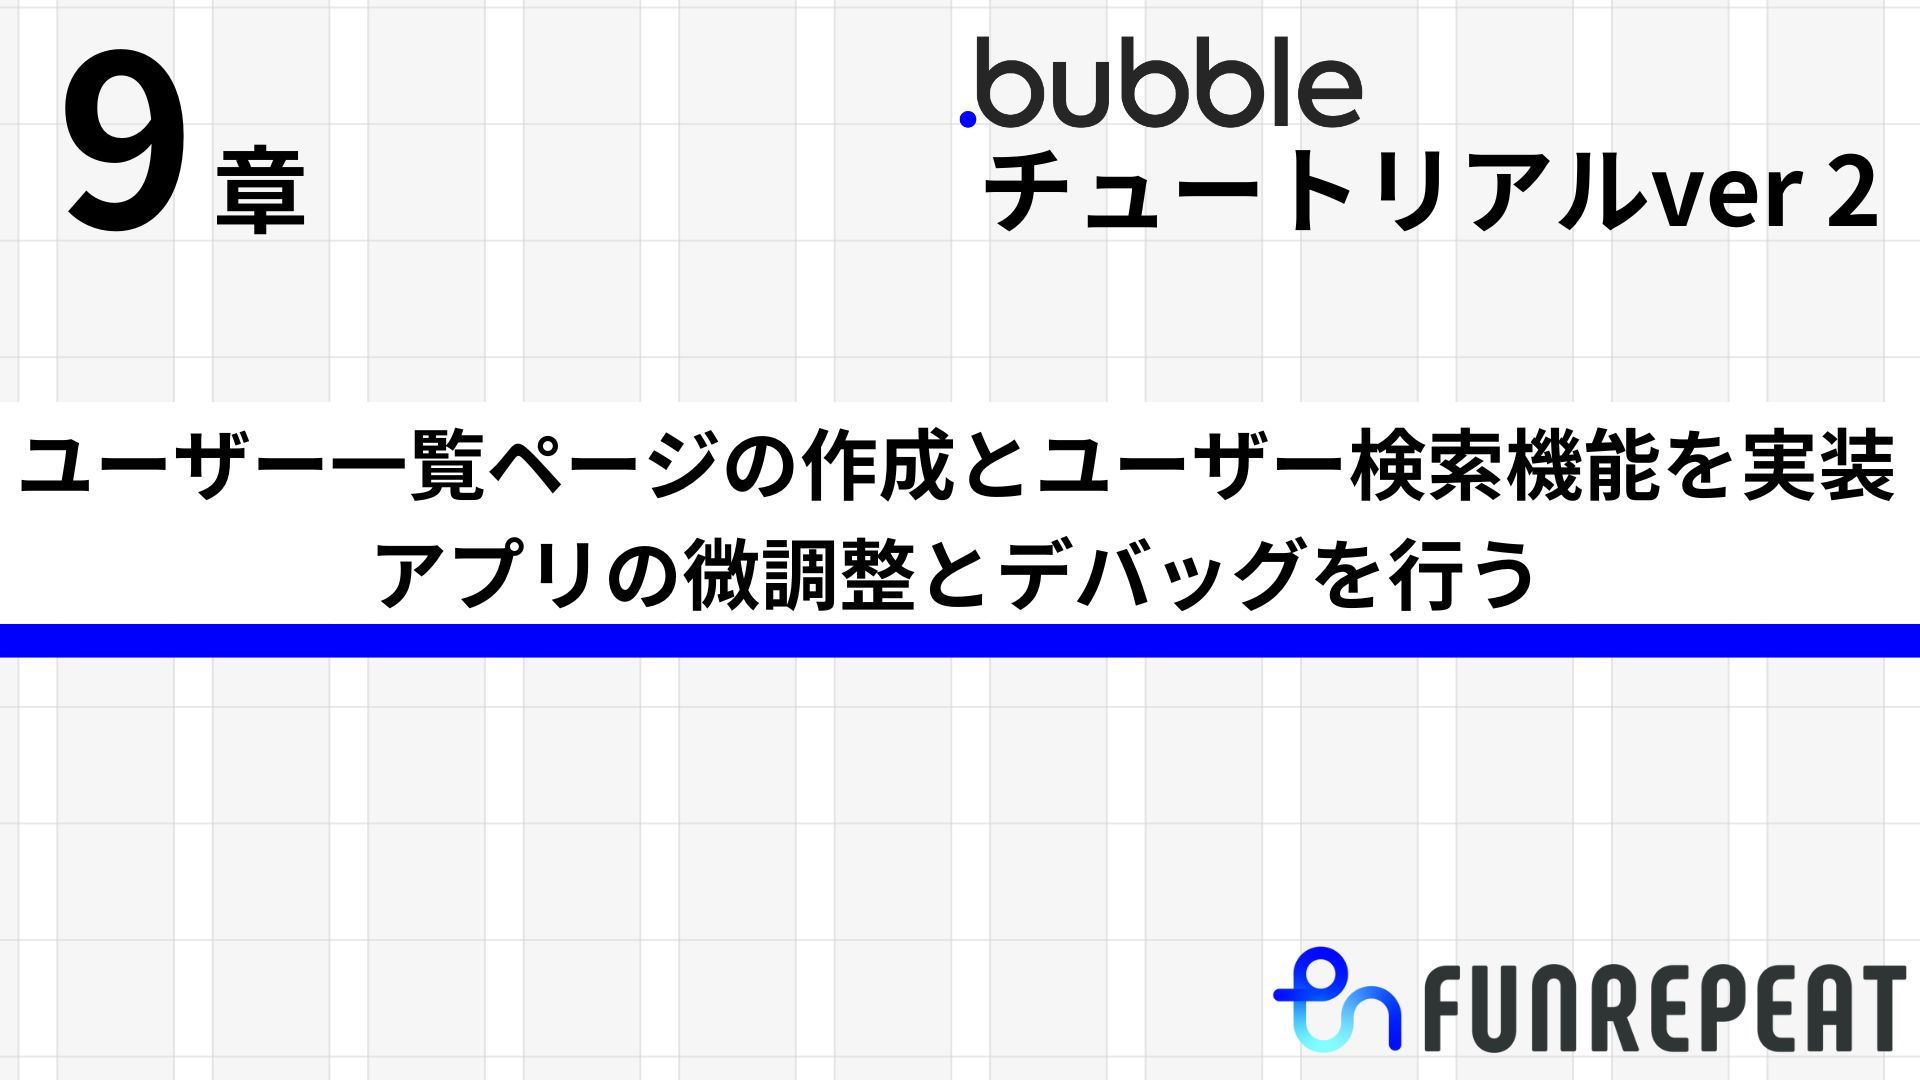 bubbleチュートリアルver2 第9章 ユーザー一覧ページの作成とユーザー検索機能の実装&アプリの微調整とデバッグを行う